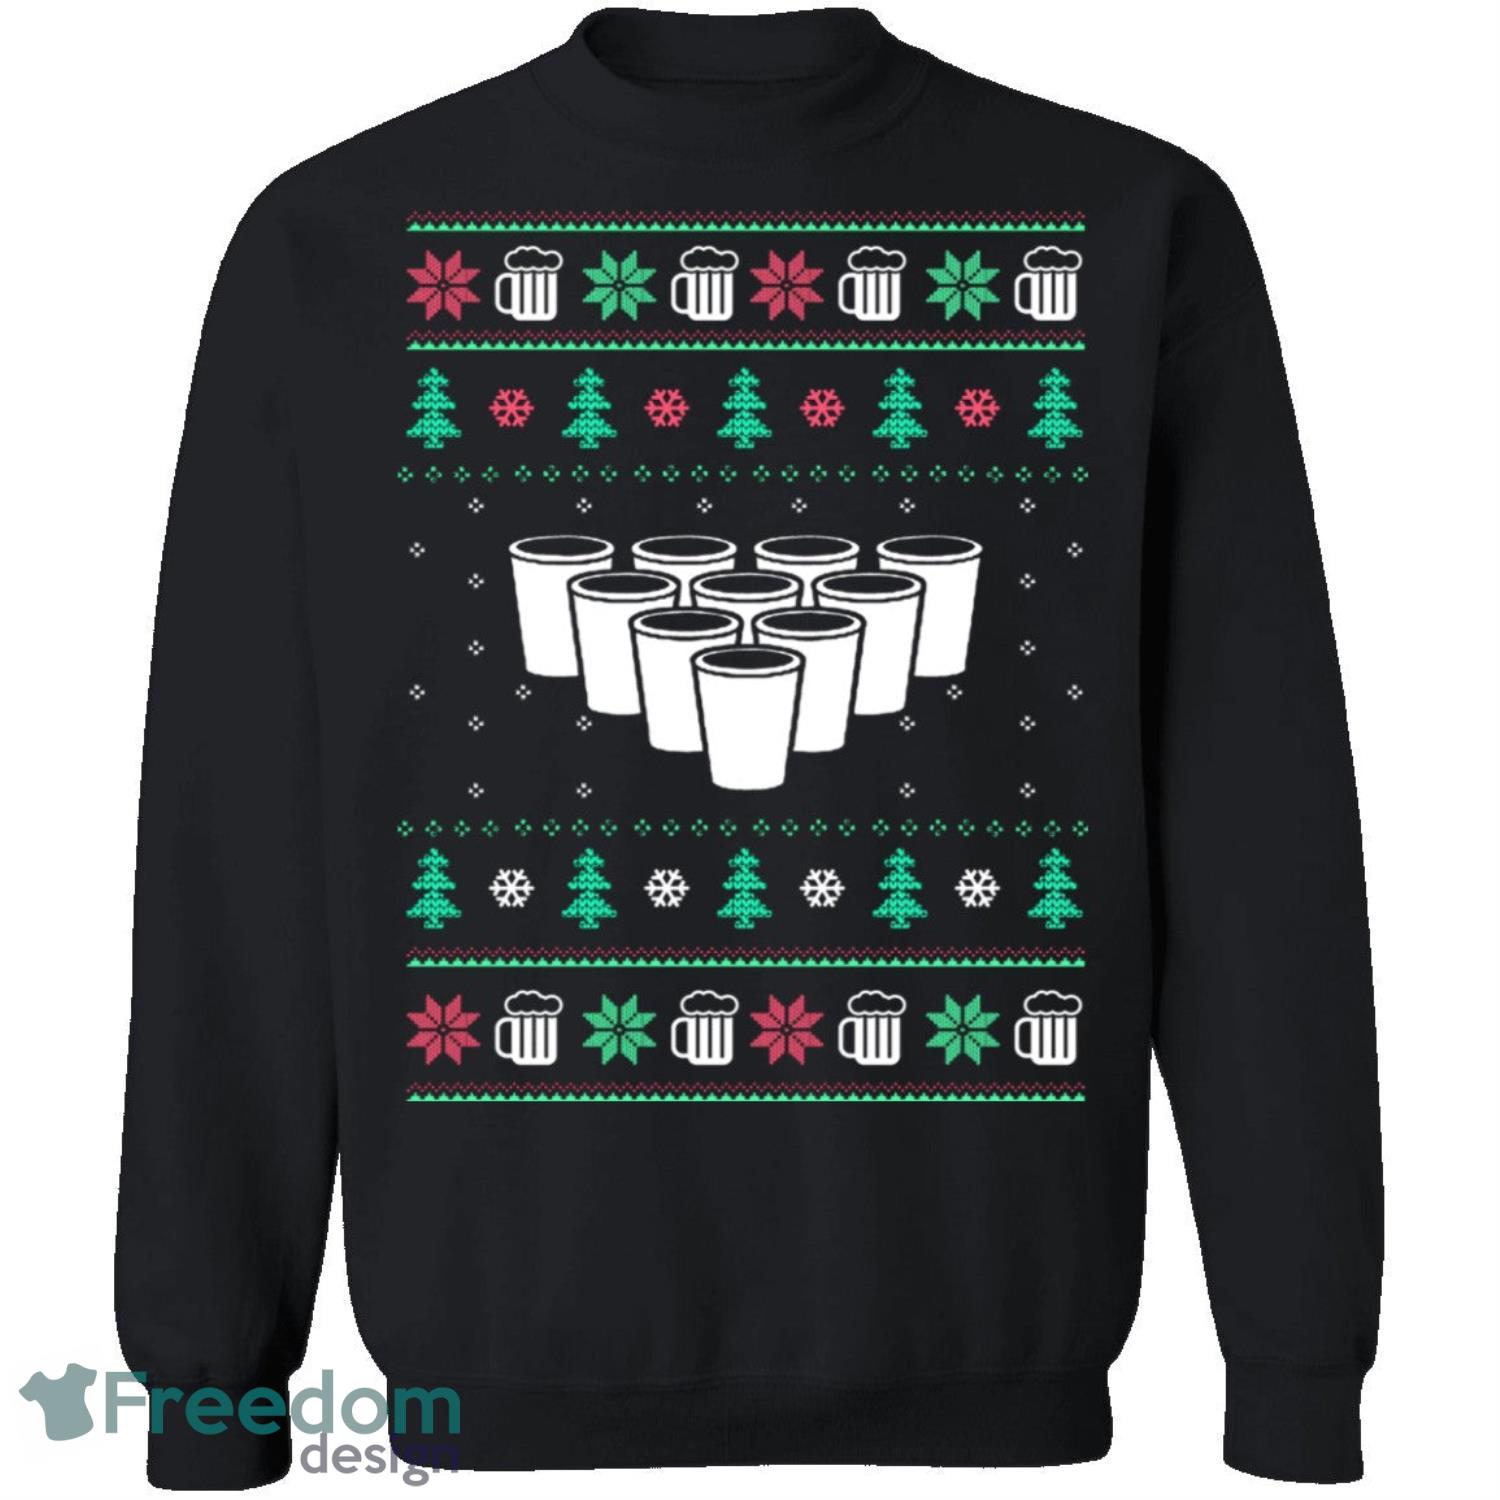 Beer Pong Knitting Pattern Ugly Christmas Sweatshirt - beer-pong-knitting-pattern-ugly-christmas-sweatshirt-1